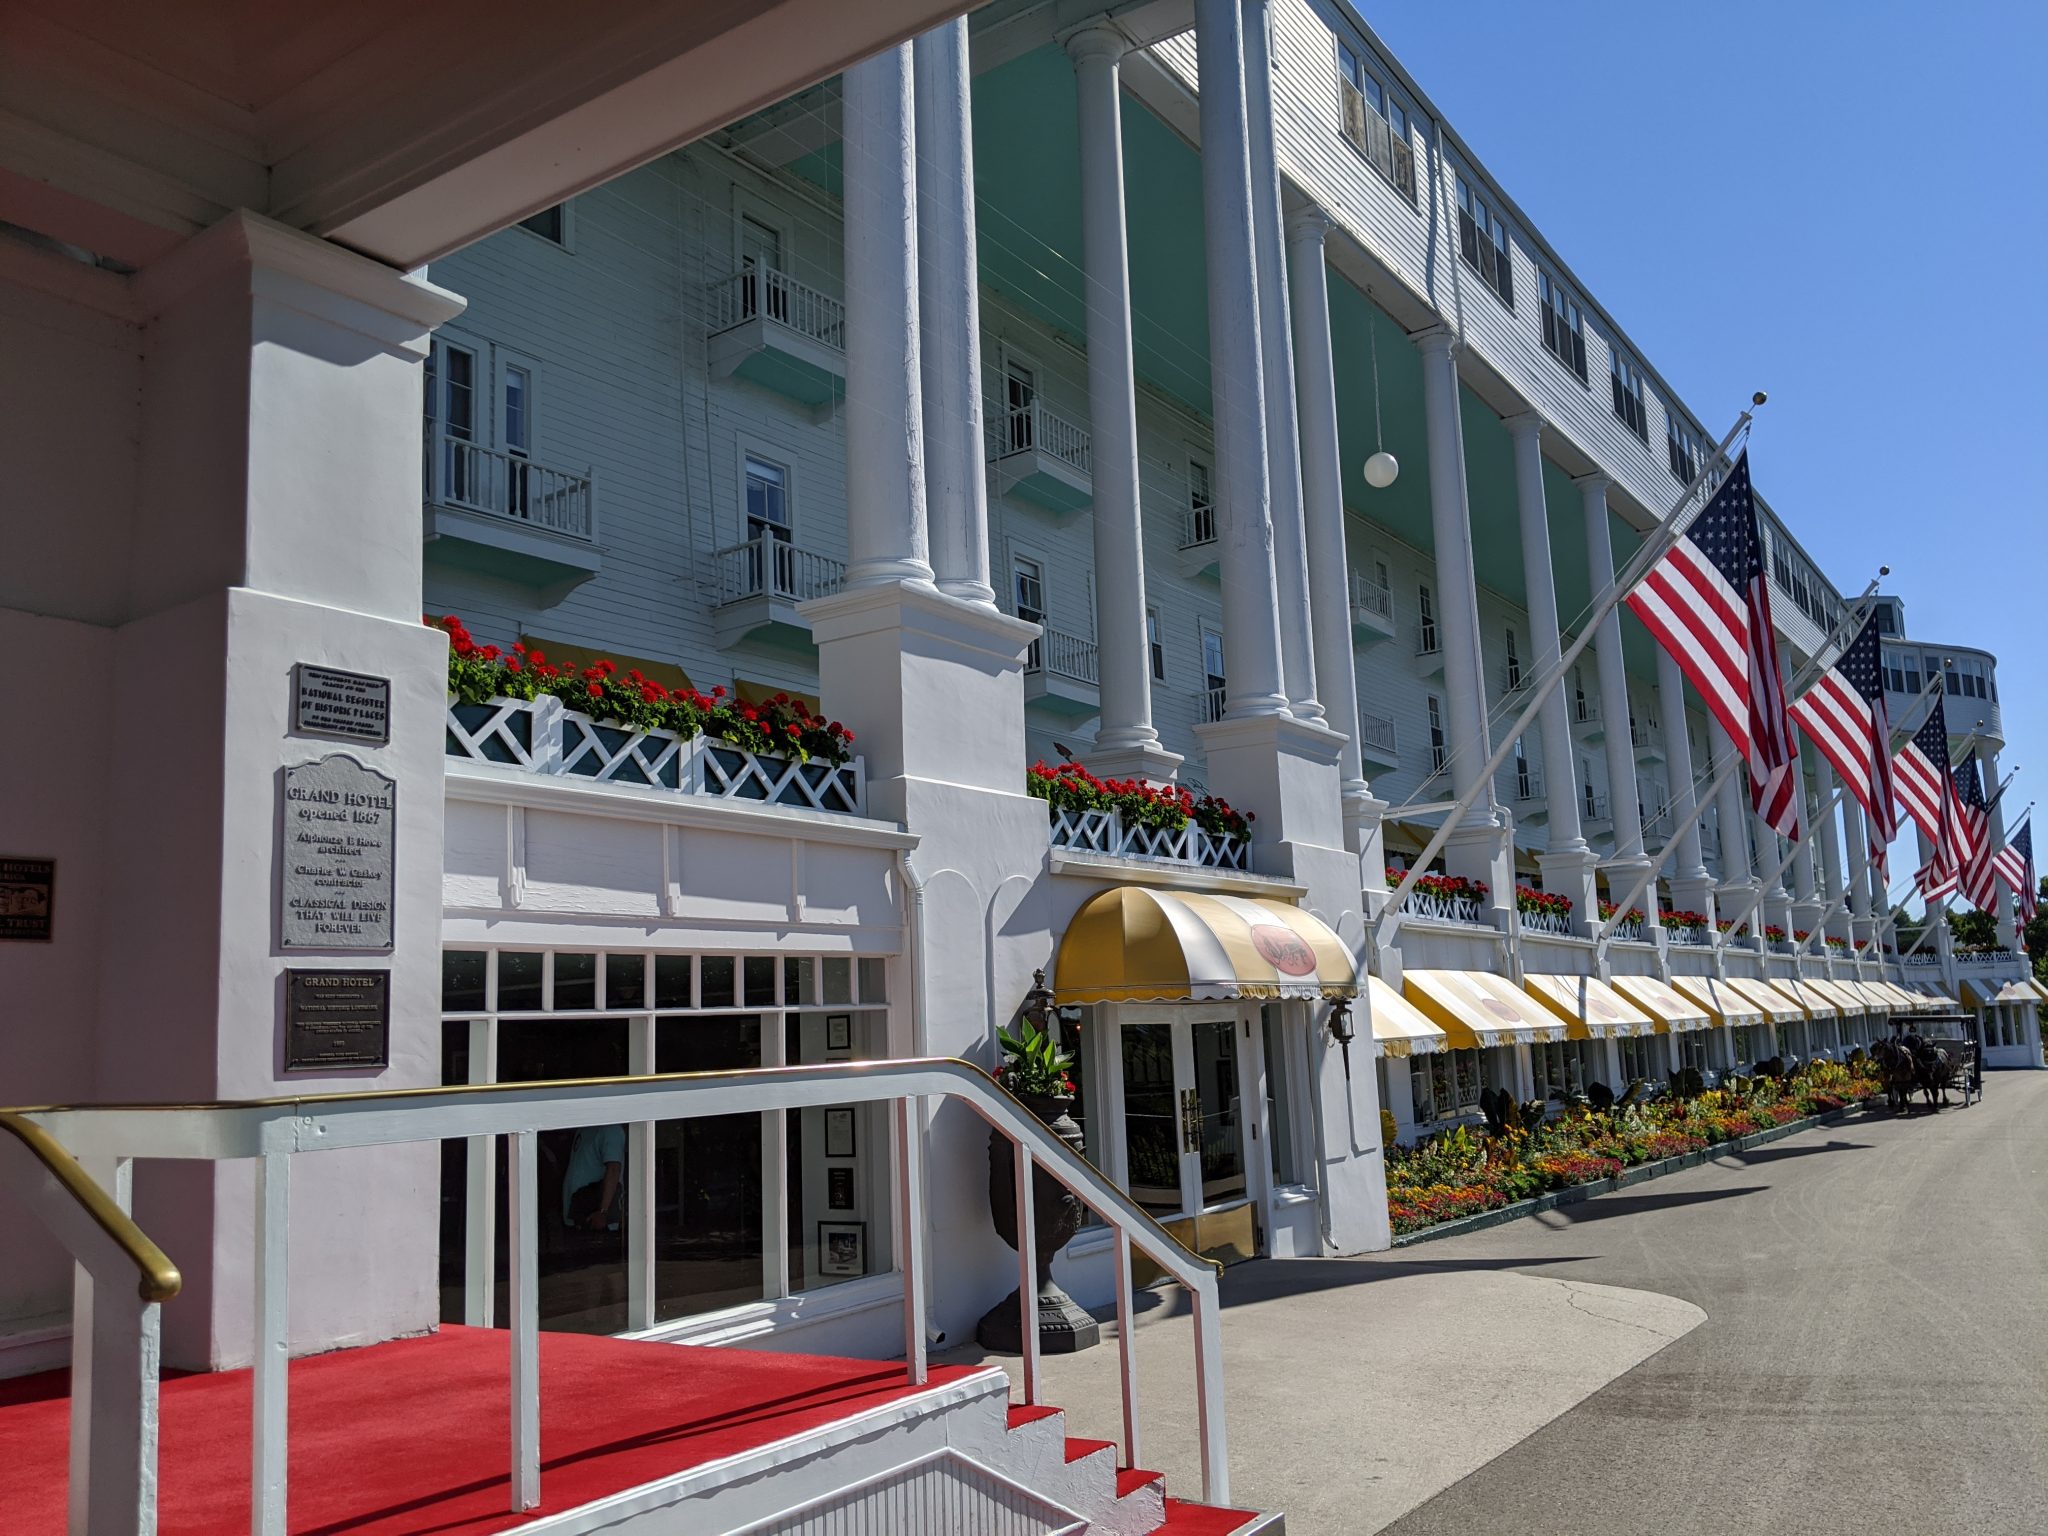 Grand Hotel promemade, Mackinac Island